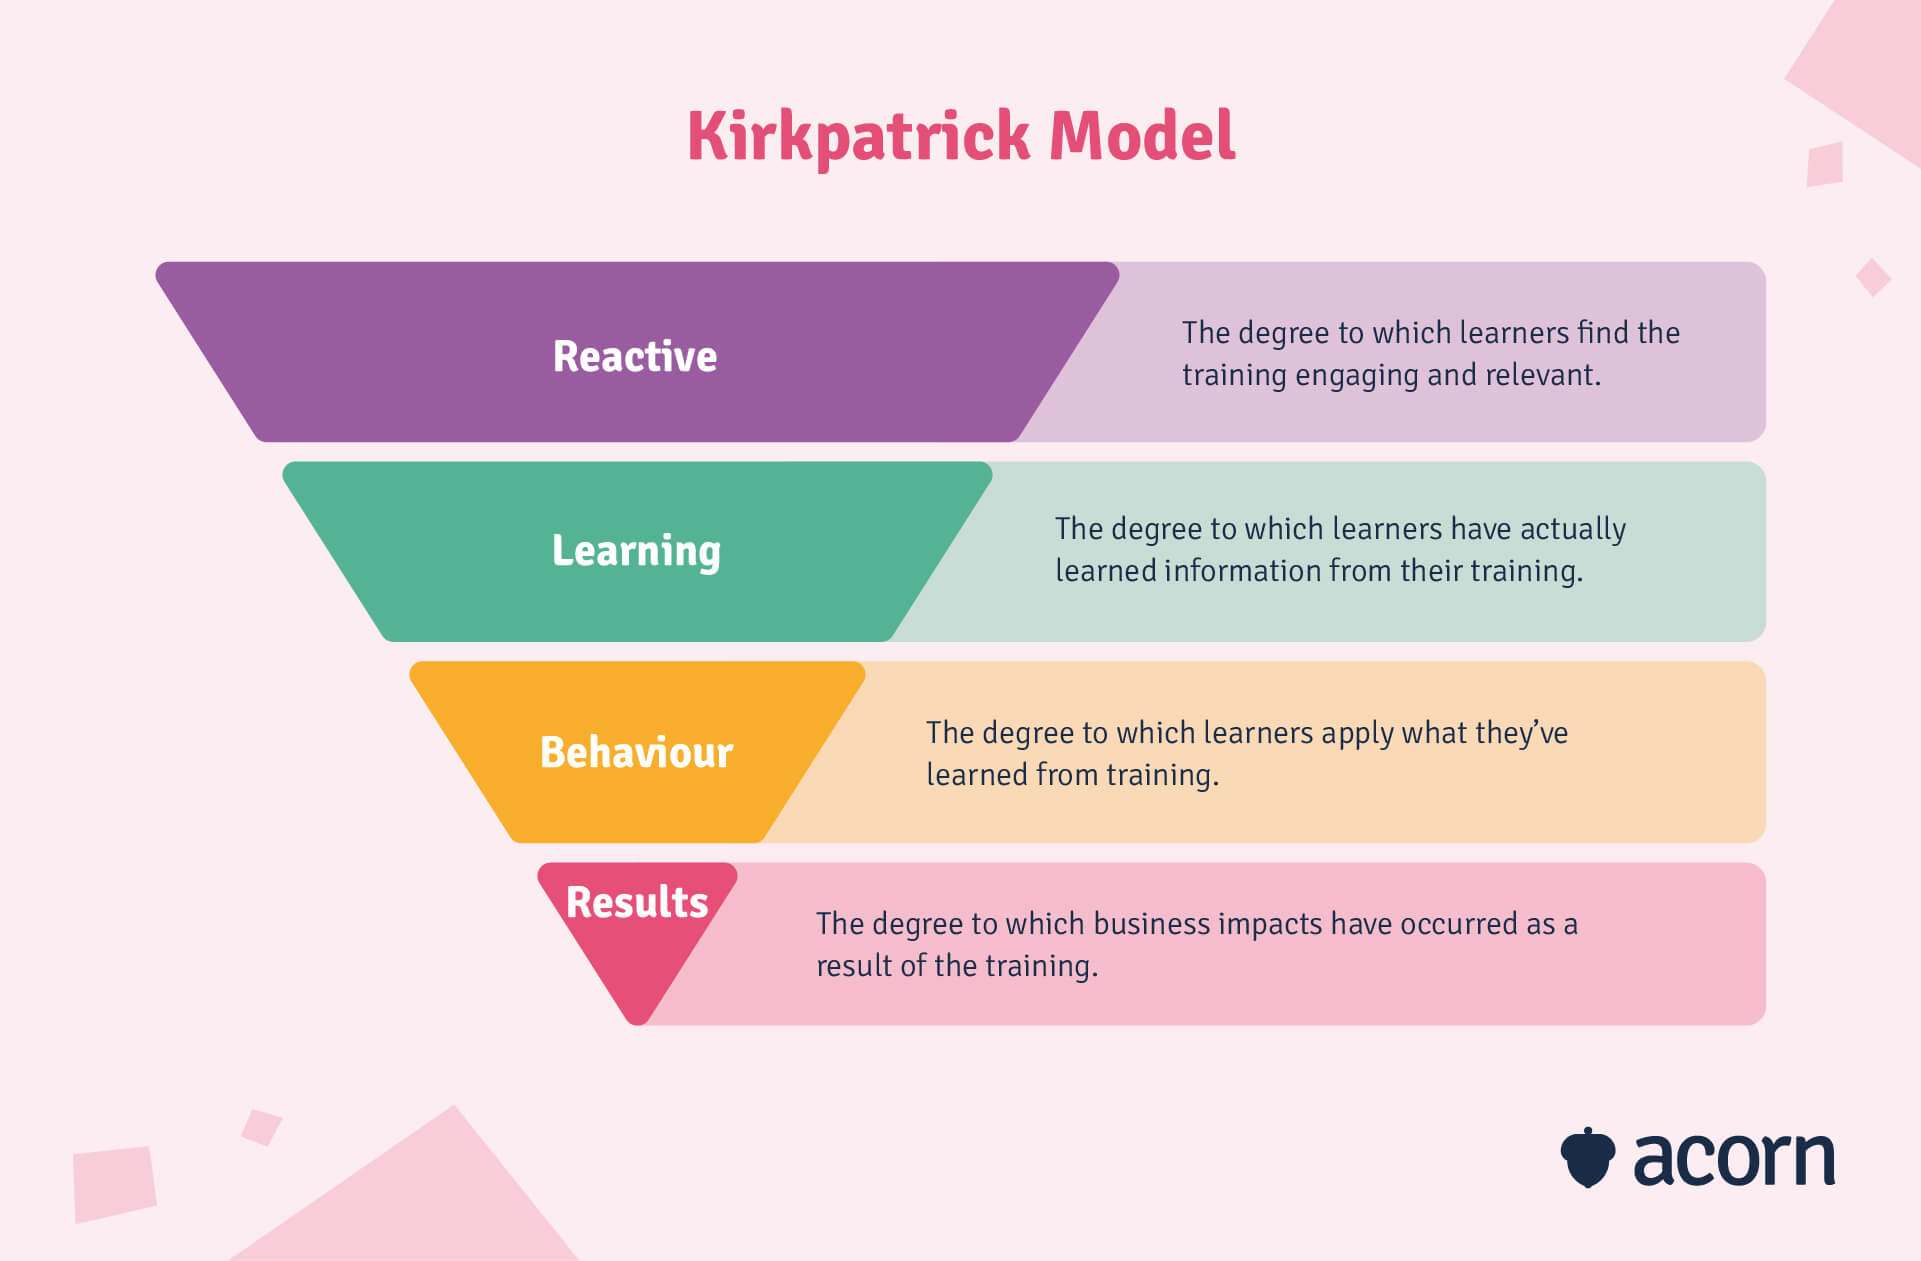 The Kirkpatrick Model for analysing ROI in training